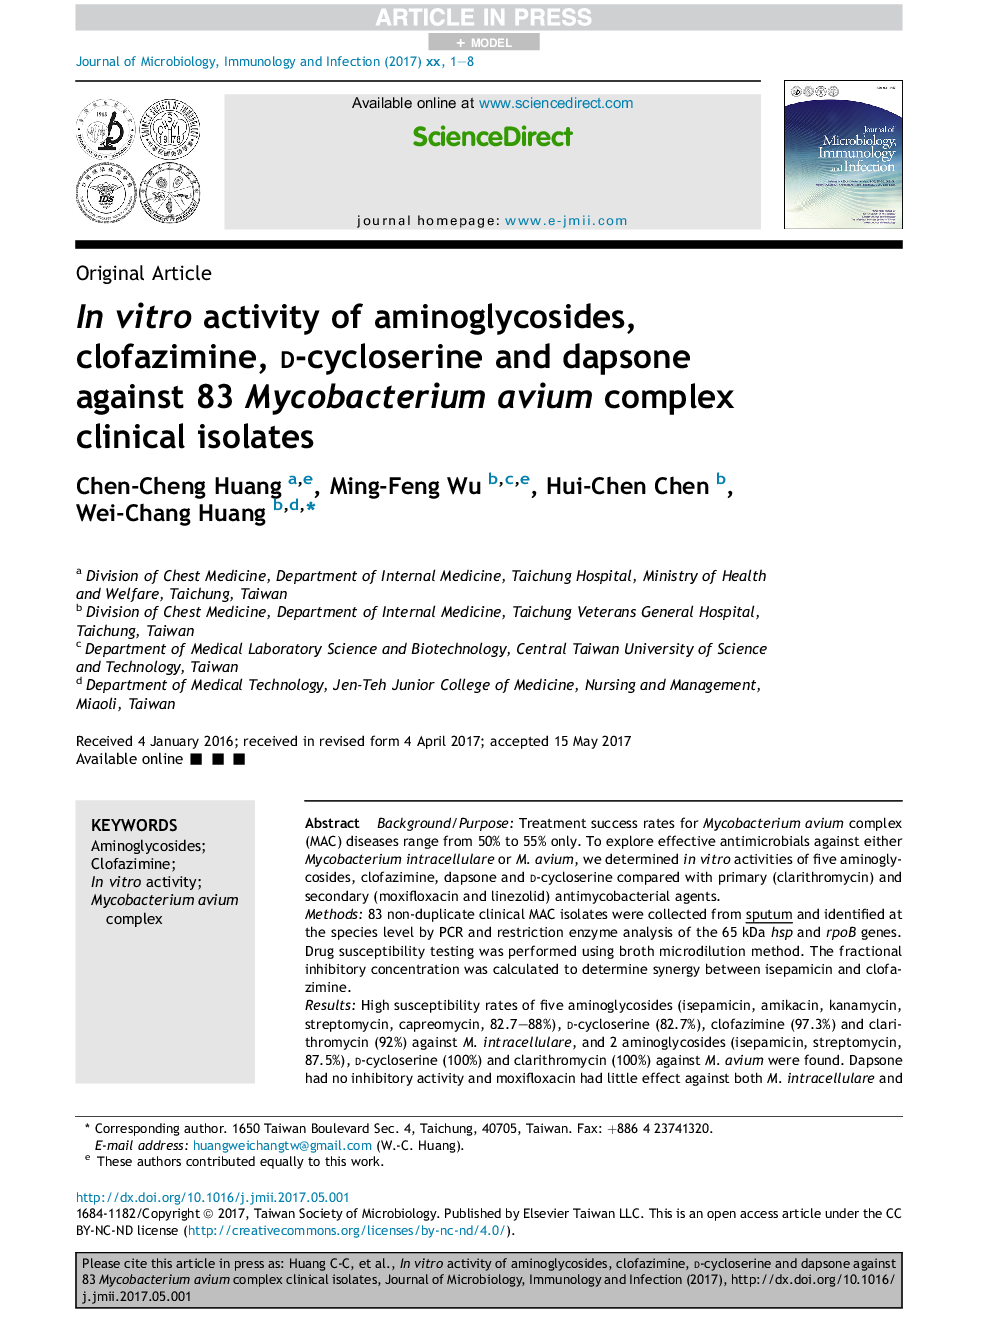 InÂ vitro activity of aminoglycosides, clofazimine, d-cycloserine and dapsone against 83 Mycobacterium avium complex clinical isolates